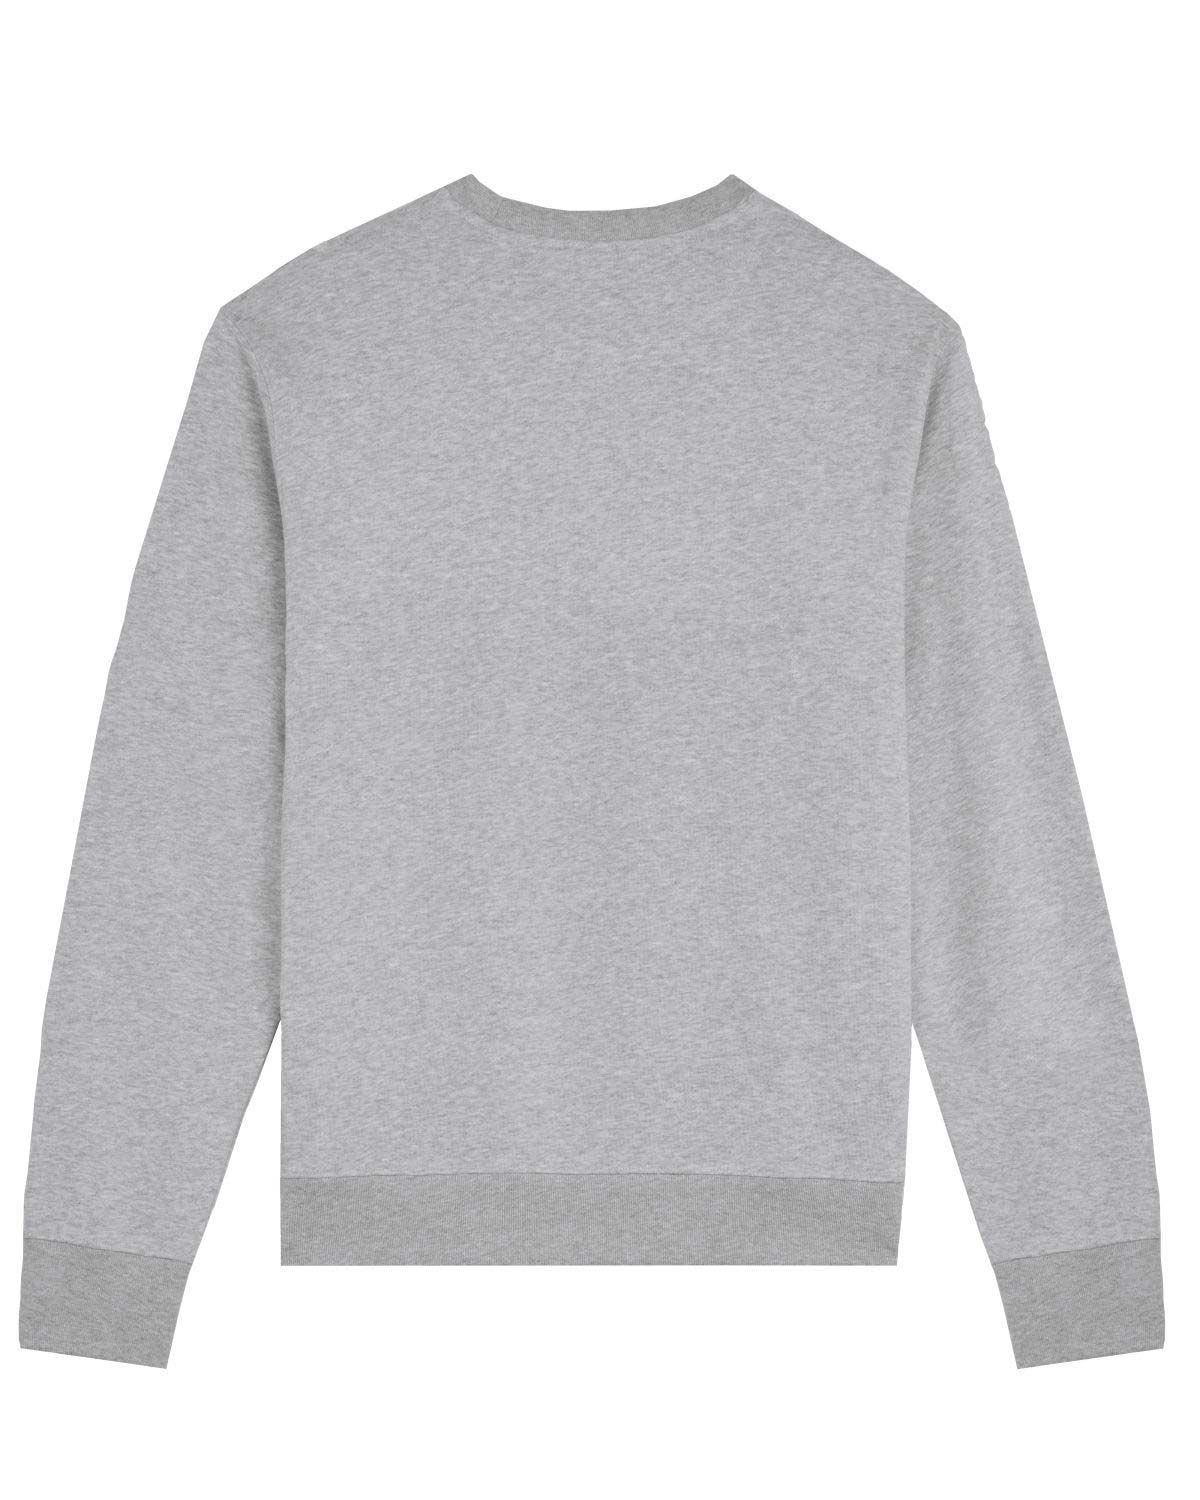 YTWOO Sweatshirt USW.08.HG.2XL Grey Heather